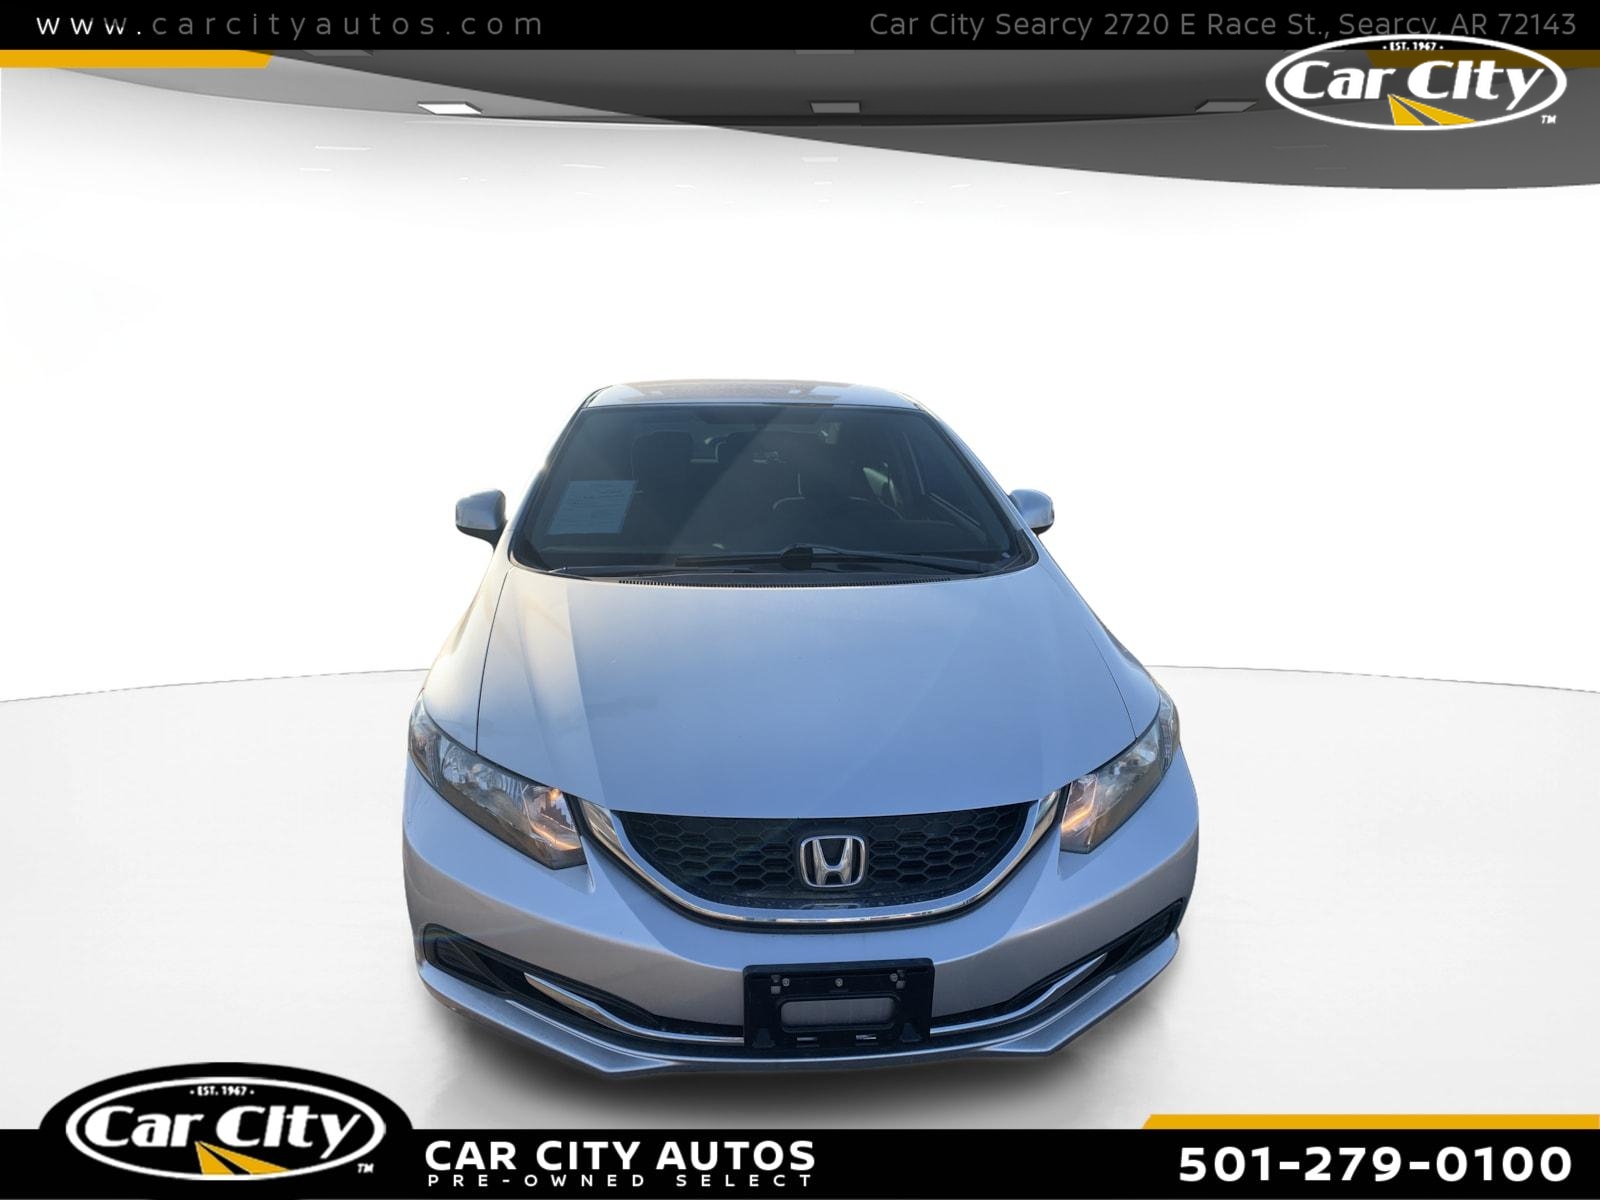 2013 Honda Civic LX  - DH593028  - Car City Autos